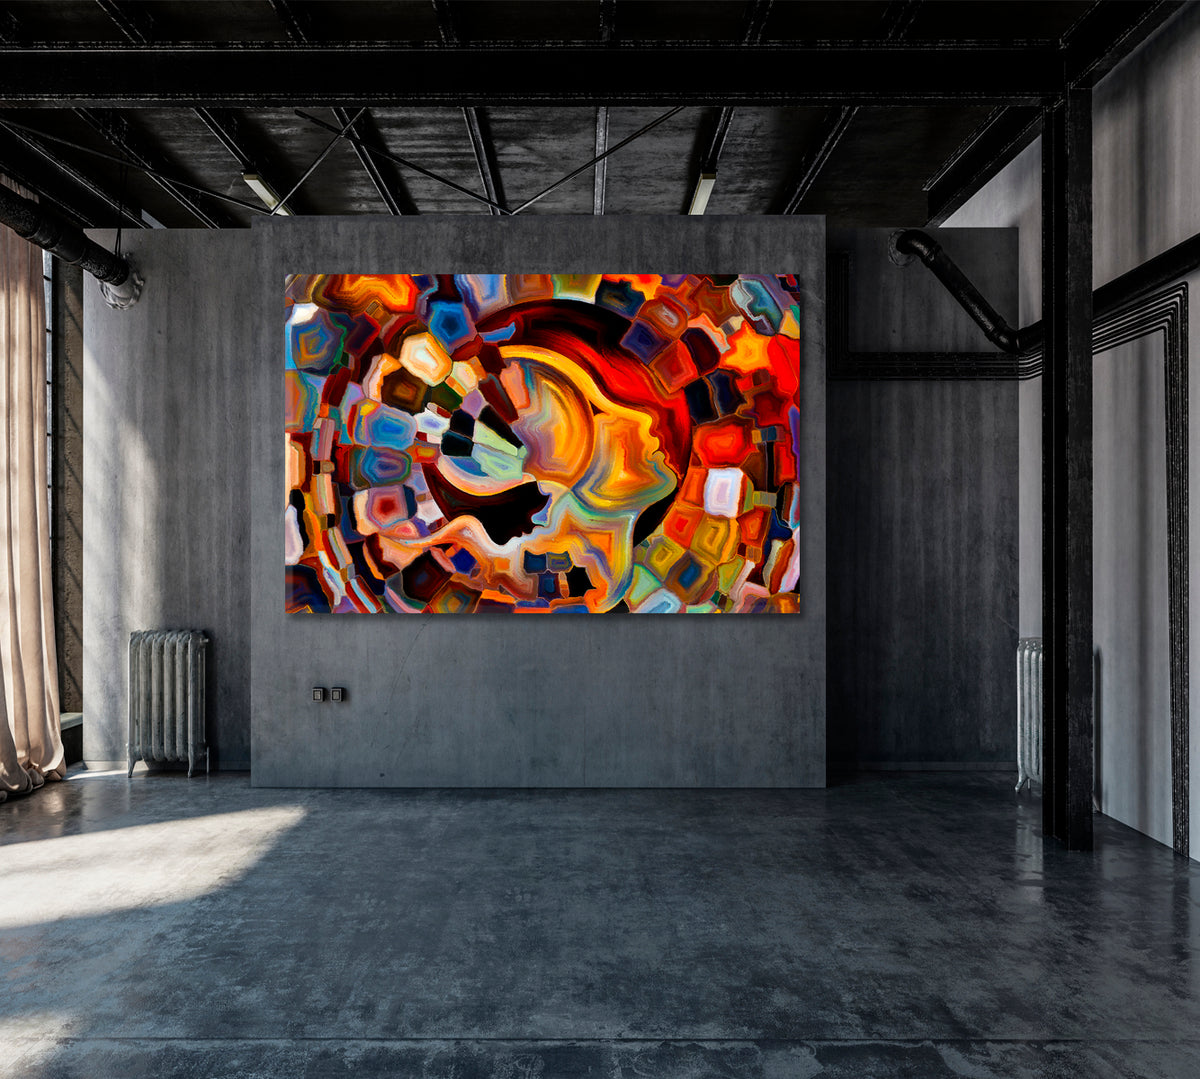 MOSAIC PATTERNS  Artistic Abstraction Human Mind Consciousness Art Artesty 1 panel 24" x 16" 